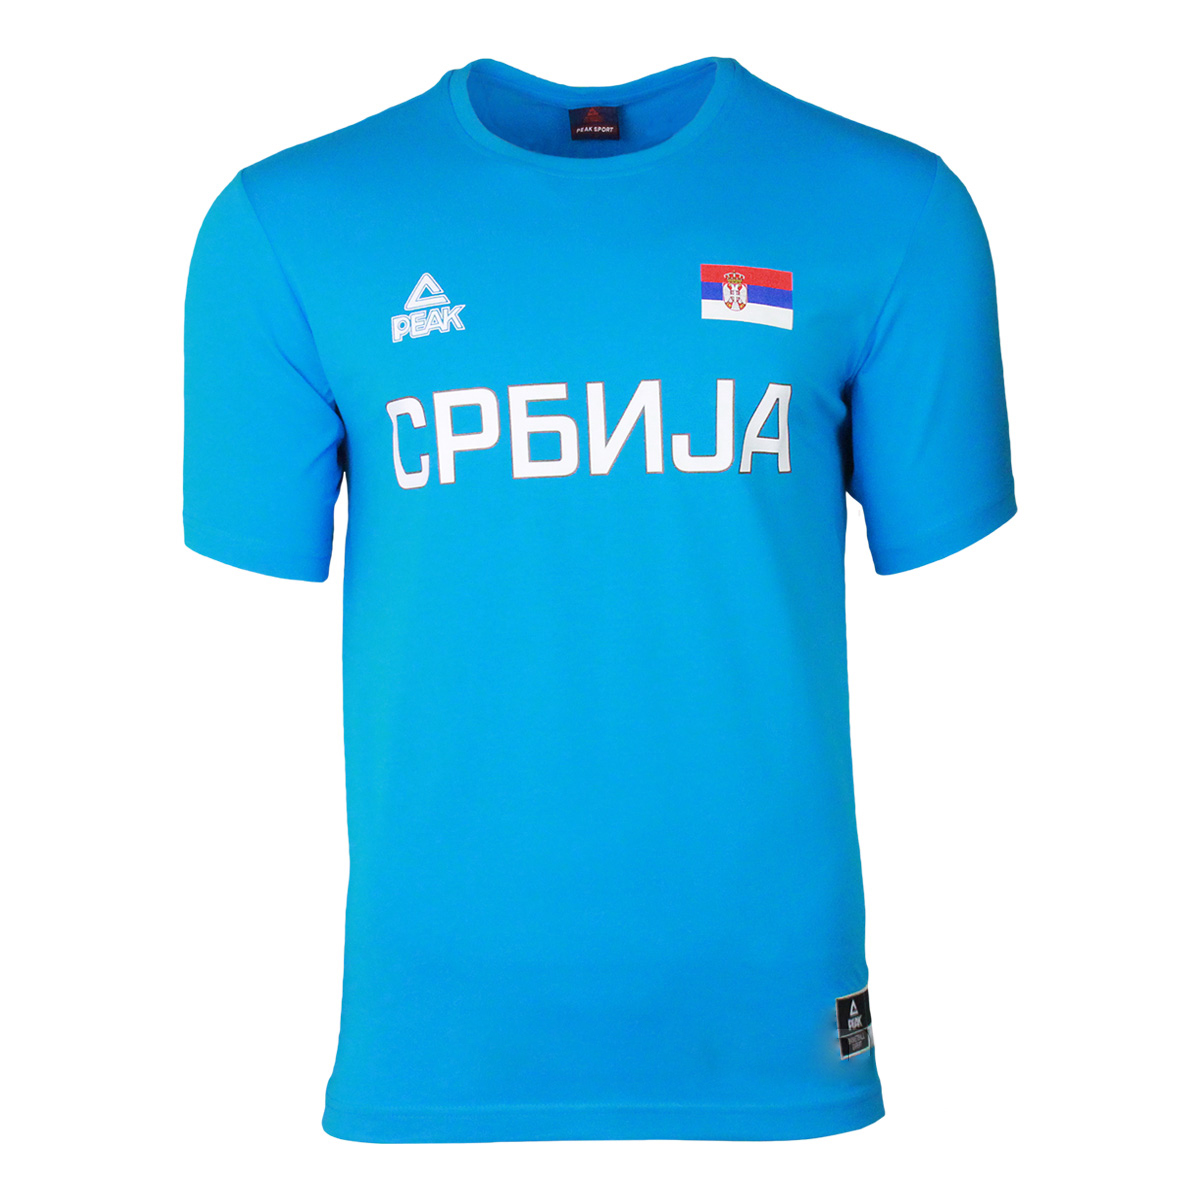 Peak Serbia national basketball team Tshirt - blue